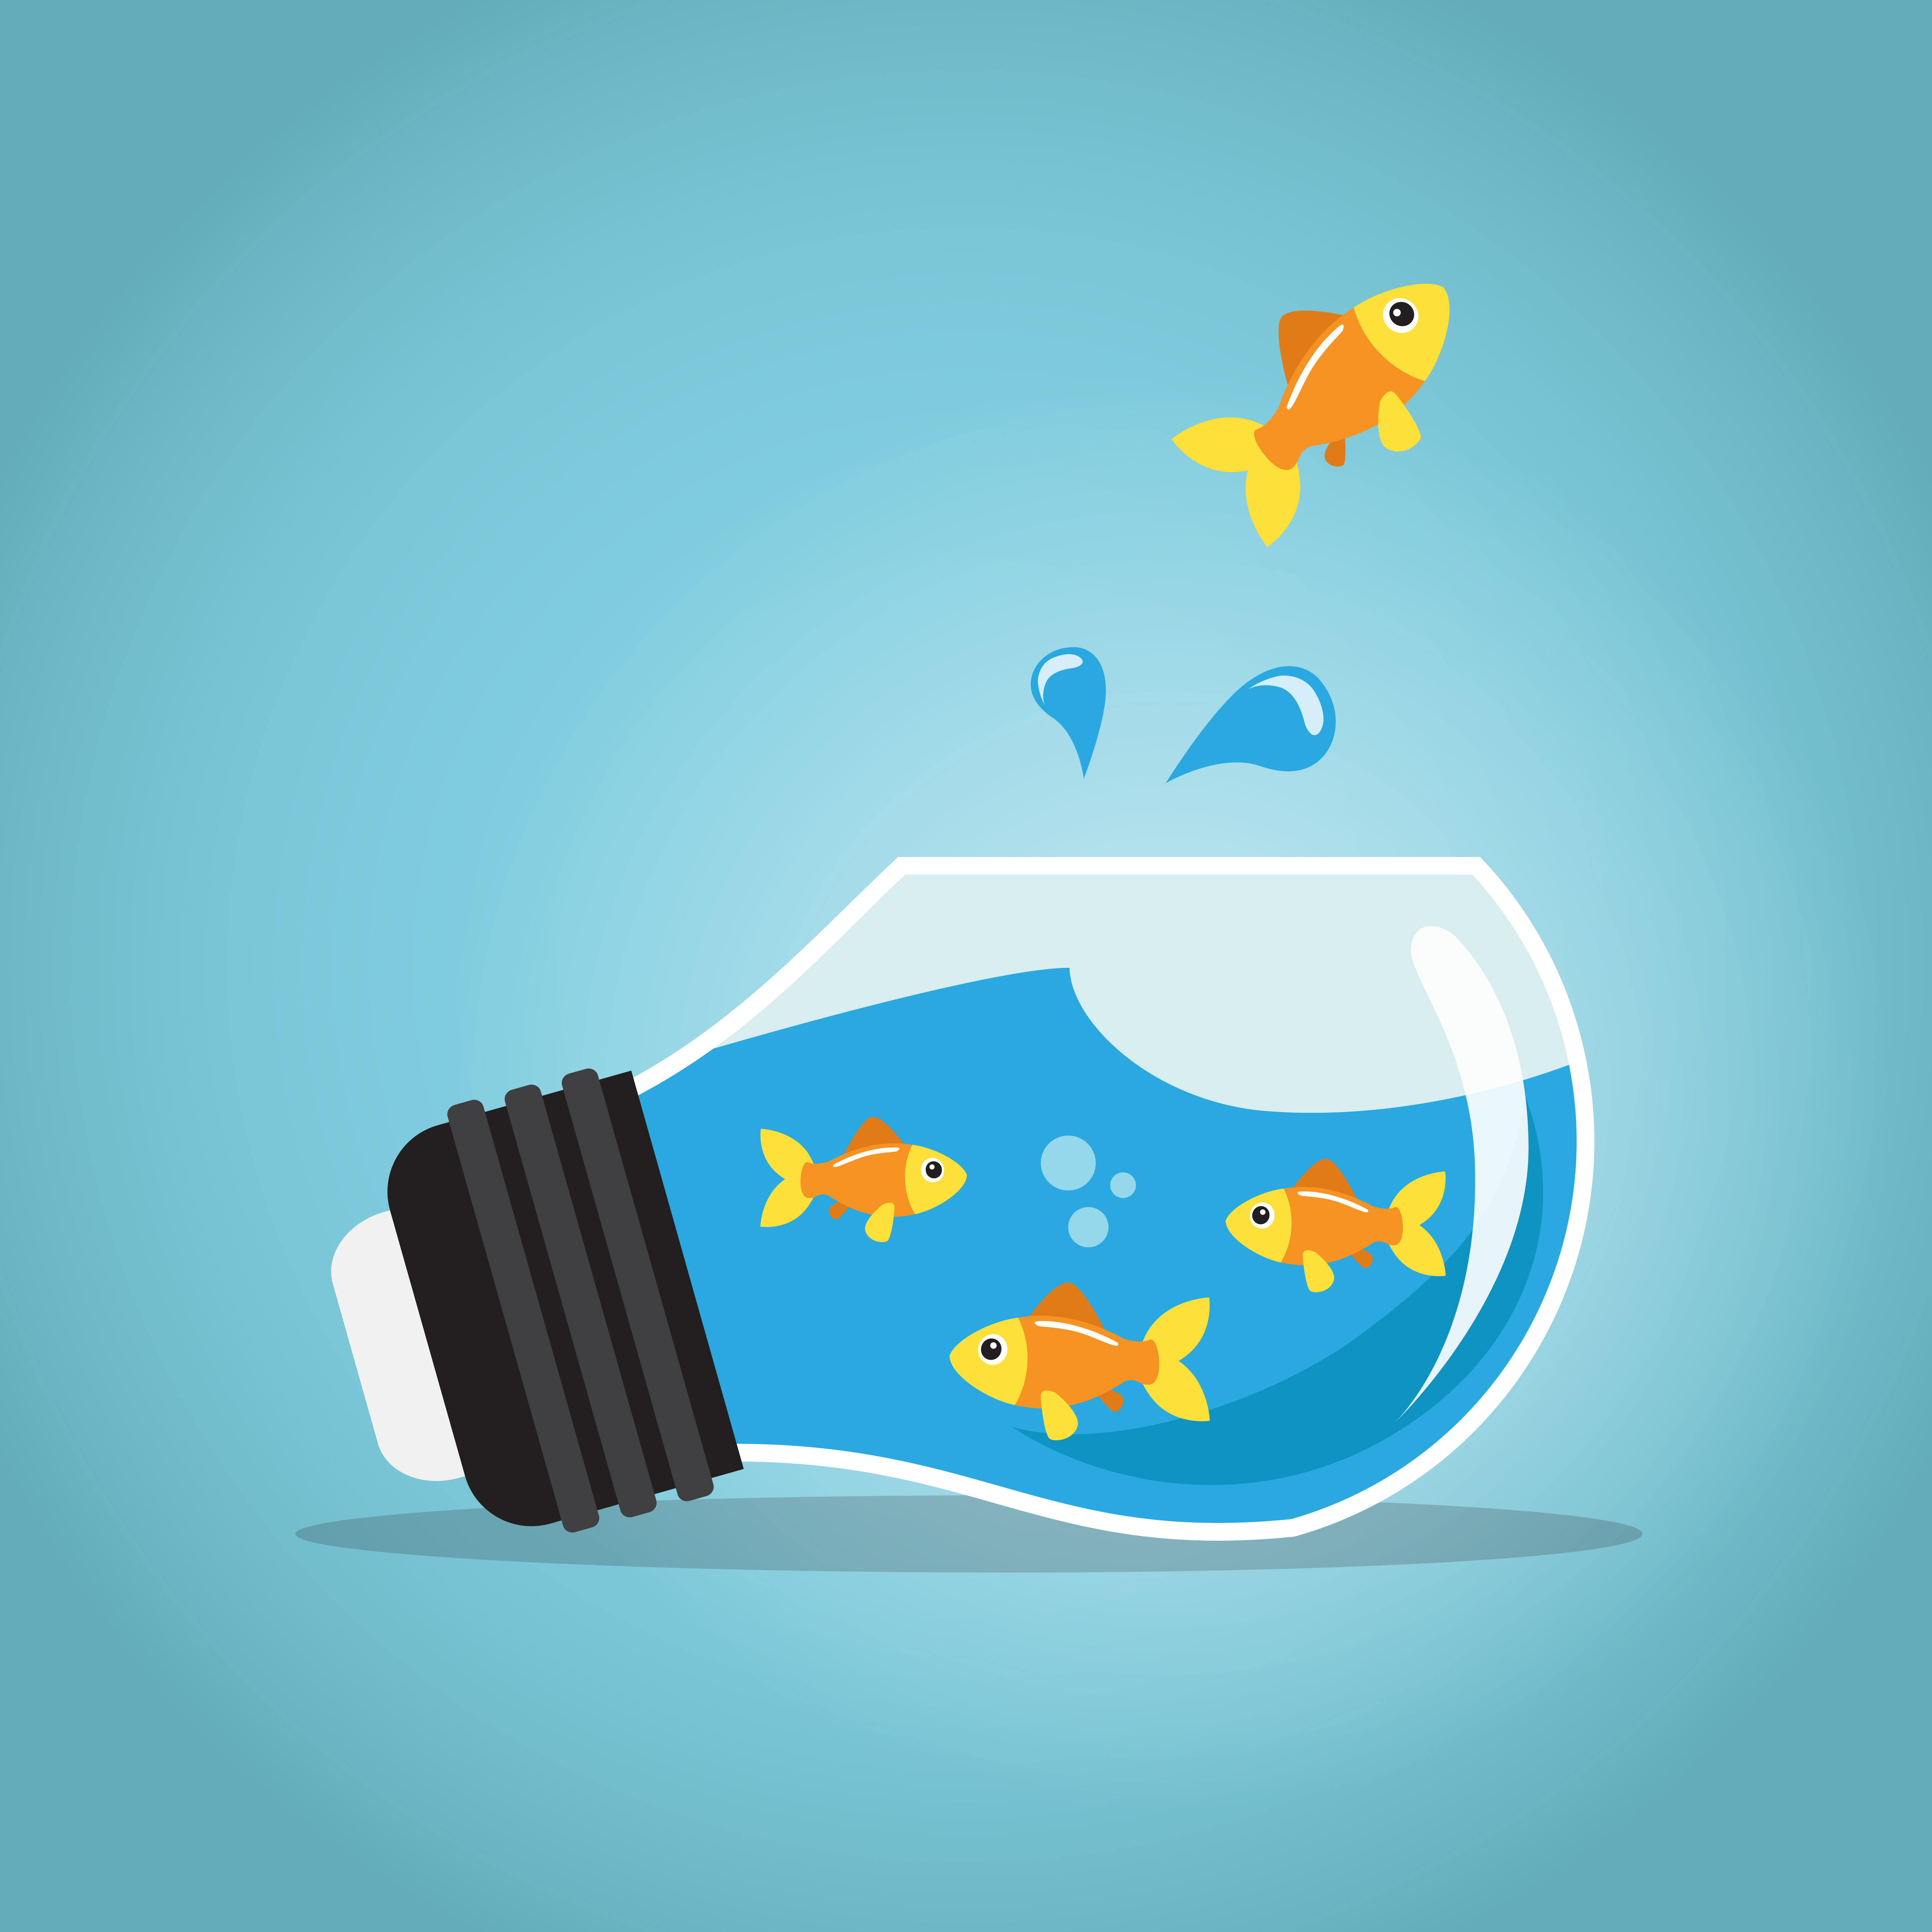 Golden Fish Jumping Out Of A Light Bulb Download Free Vectors Clipart Graphics Vector Art